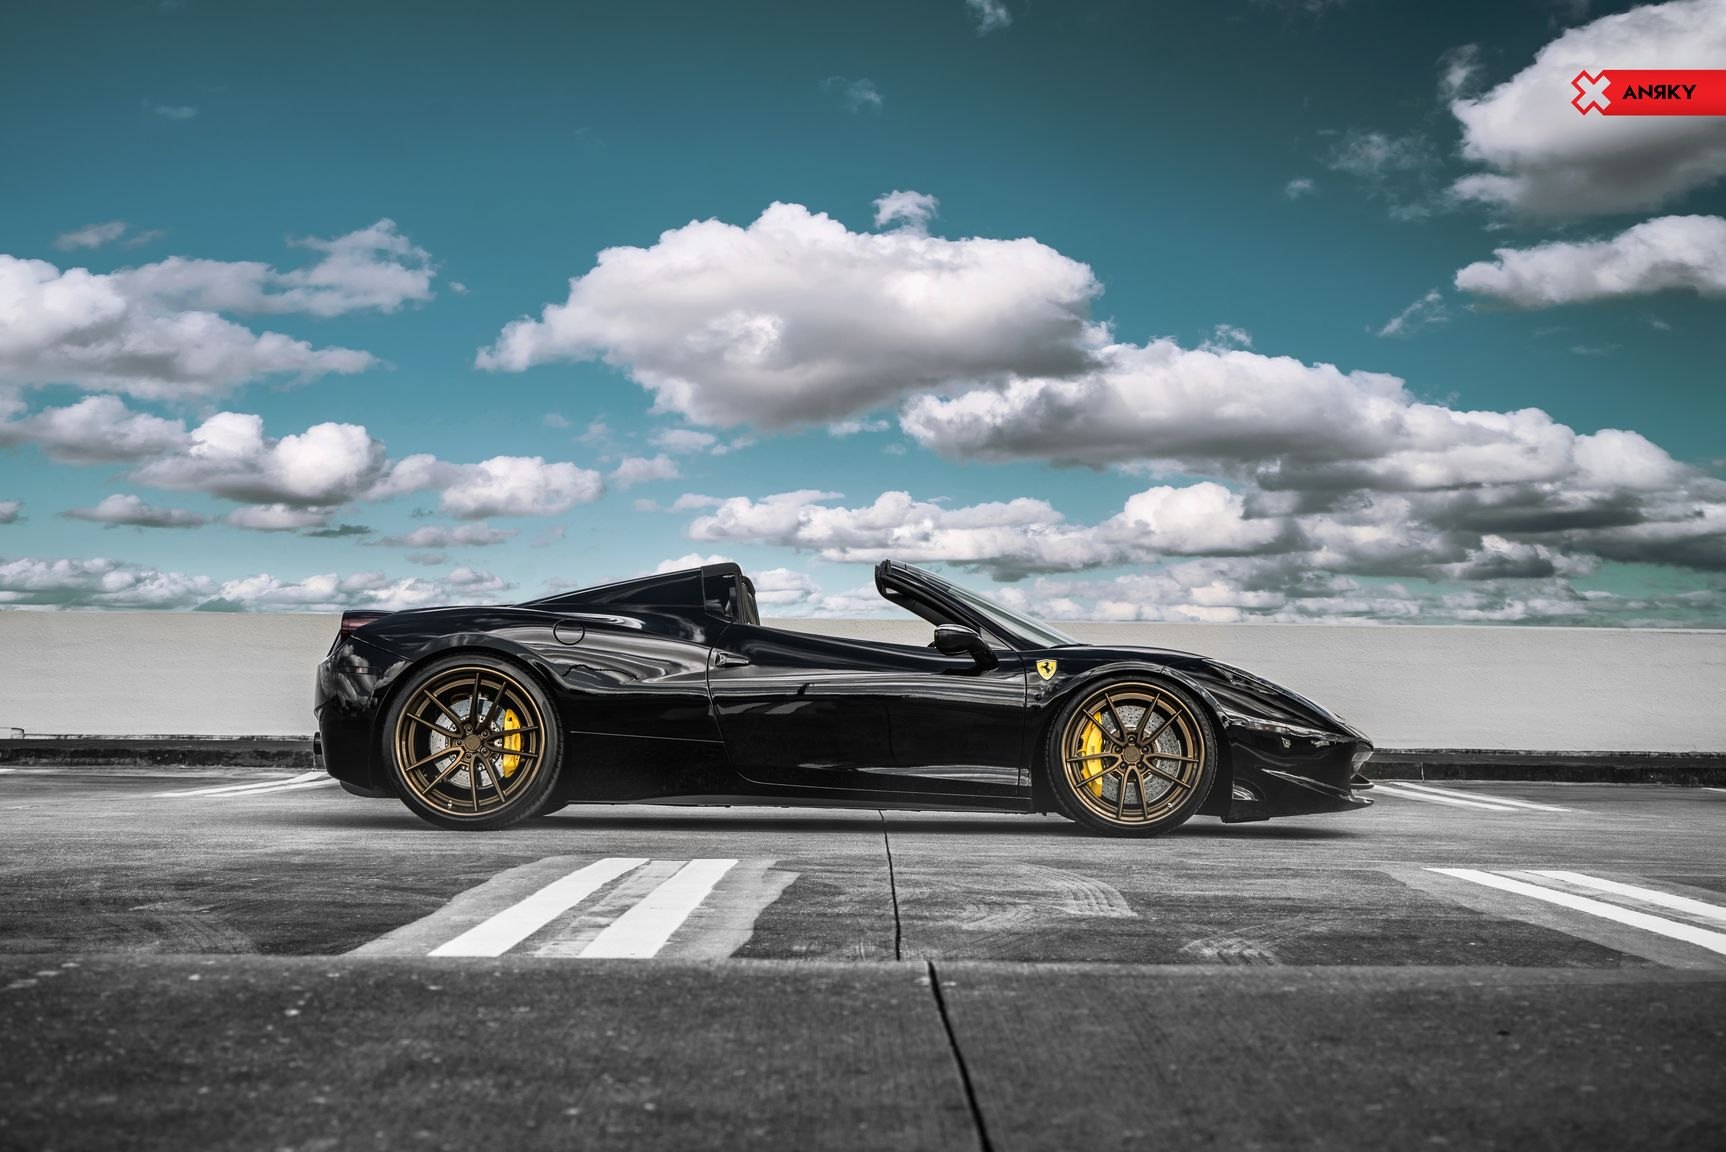 Matte Bronze Anrky Wheels on Black Ferrari 458 - Photo by Anrky Wheels